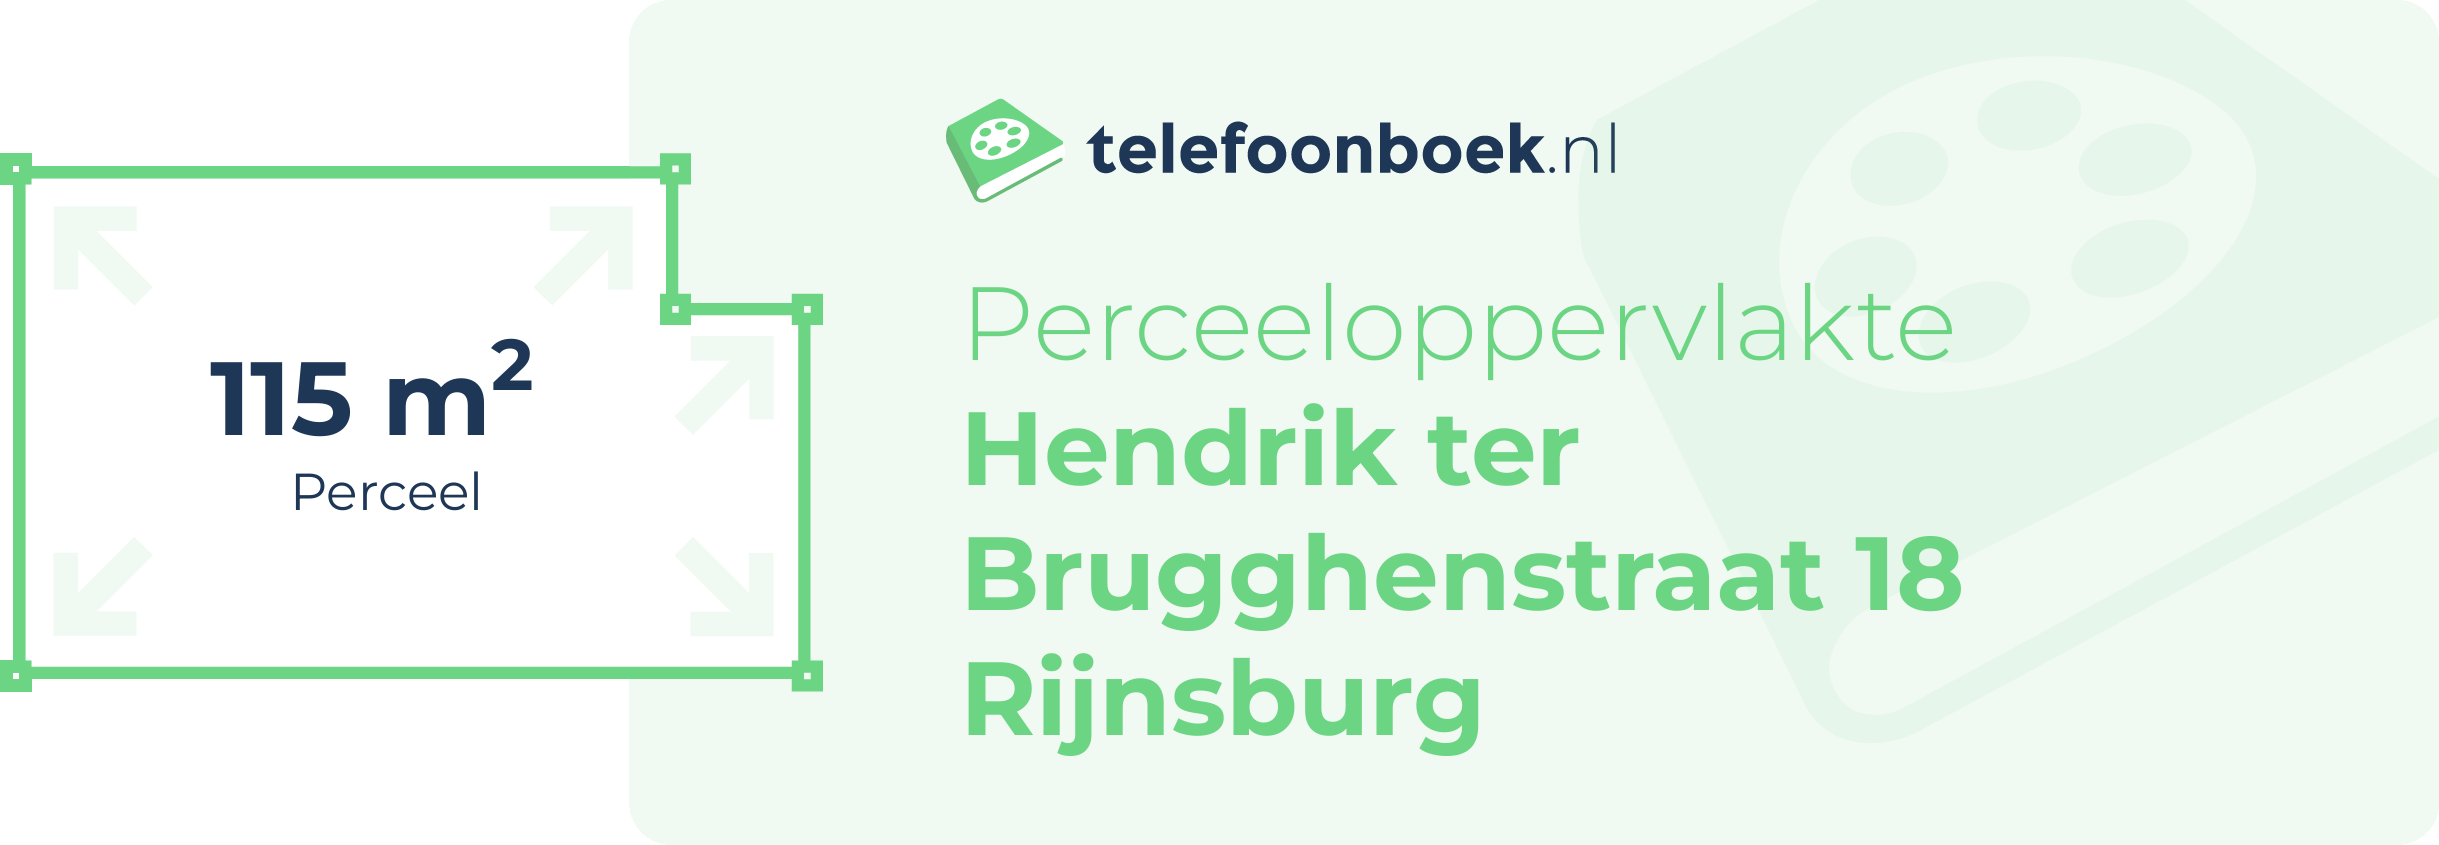 Perceeloppervlakte Hendrik Ter Brugghenstraat 18 Rijnsburg